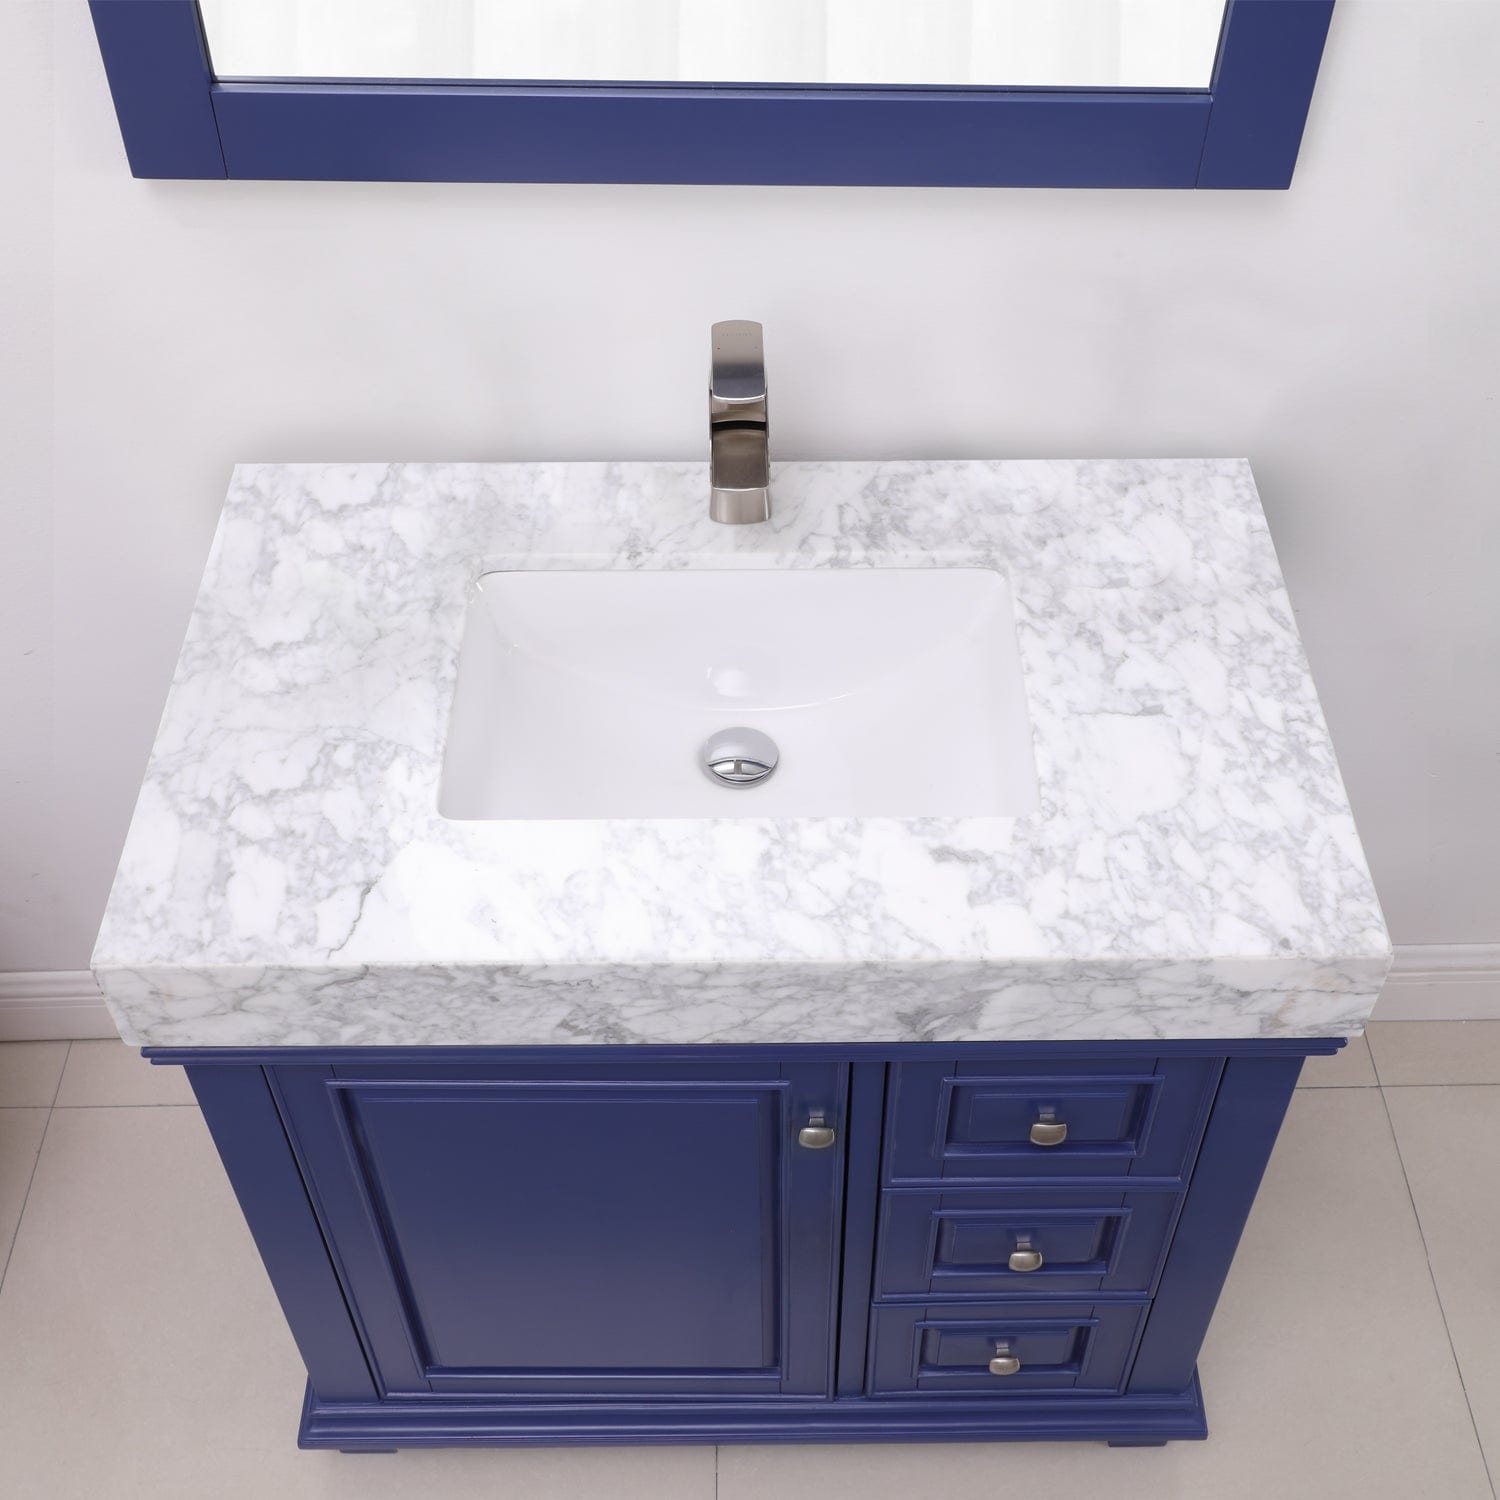 Altair Jardin 36" Single Bathroom Vanity Set in Jewelry Blue and Carrara White Marble Countertop with Mirror 539036-JB-CA - Molaix631112970952Vanity539036-JB-CA